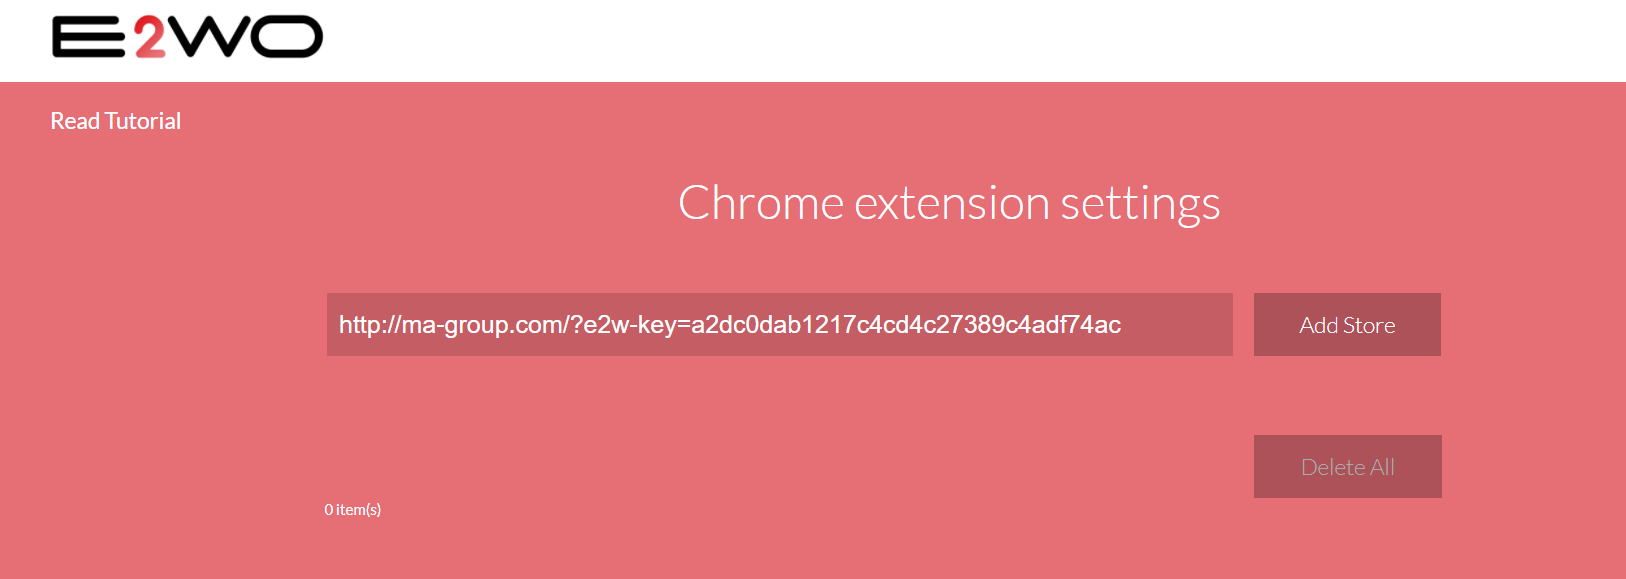 ebay-chrome-extension-options-paste-key